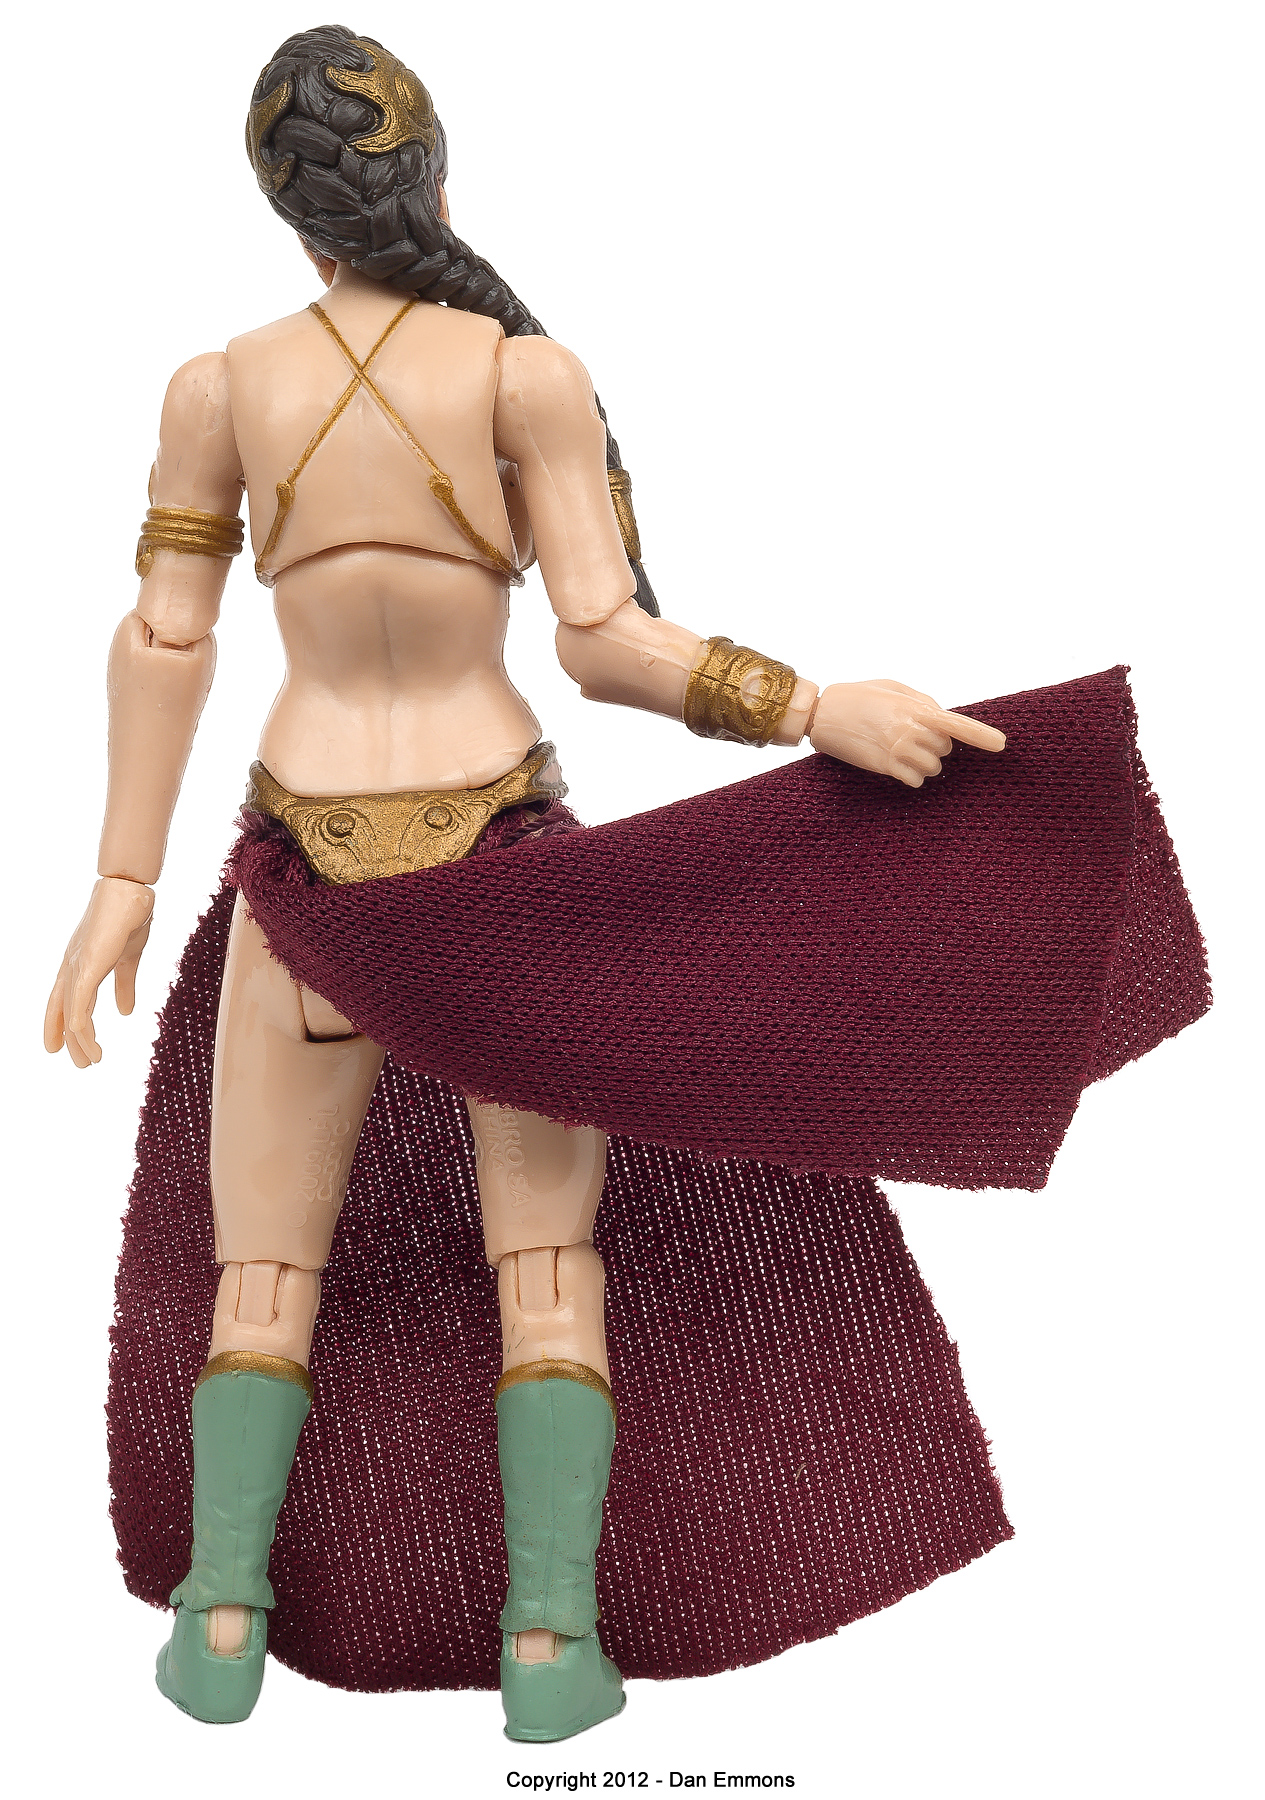 The Vintage Collection - VC88: Princess Leia (Sandstorm Outfit)